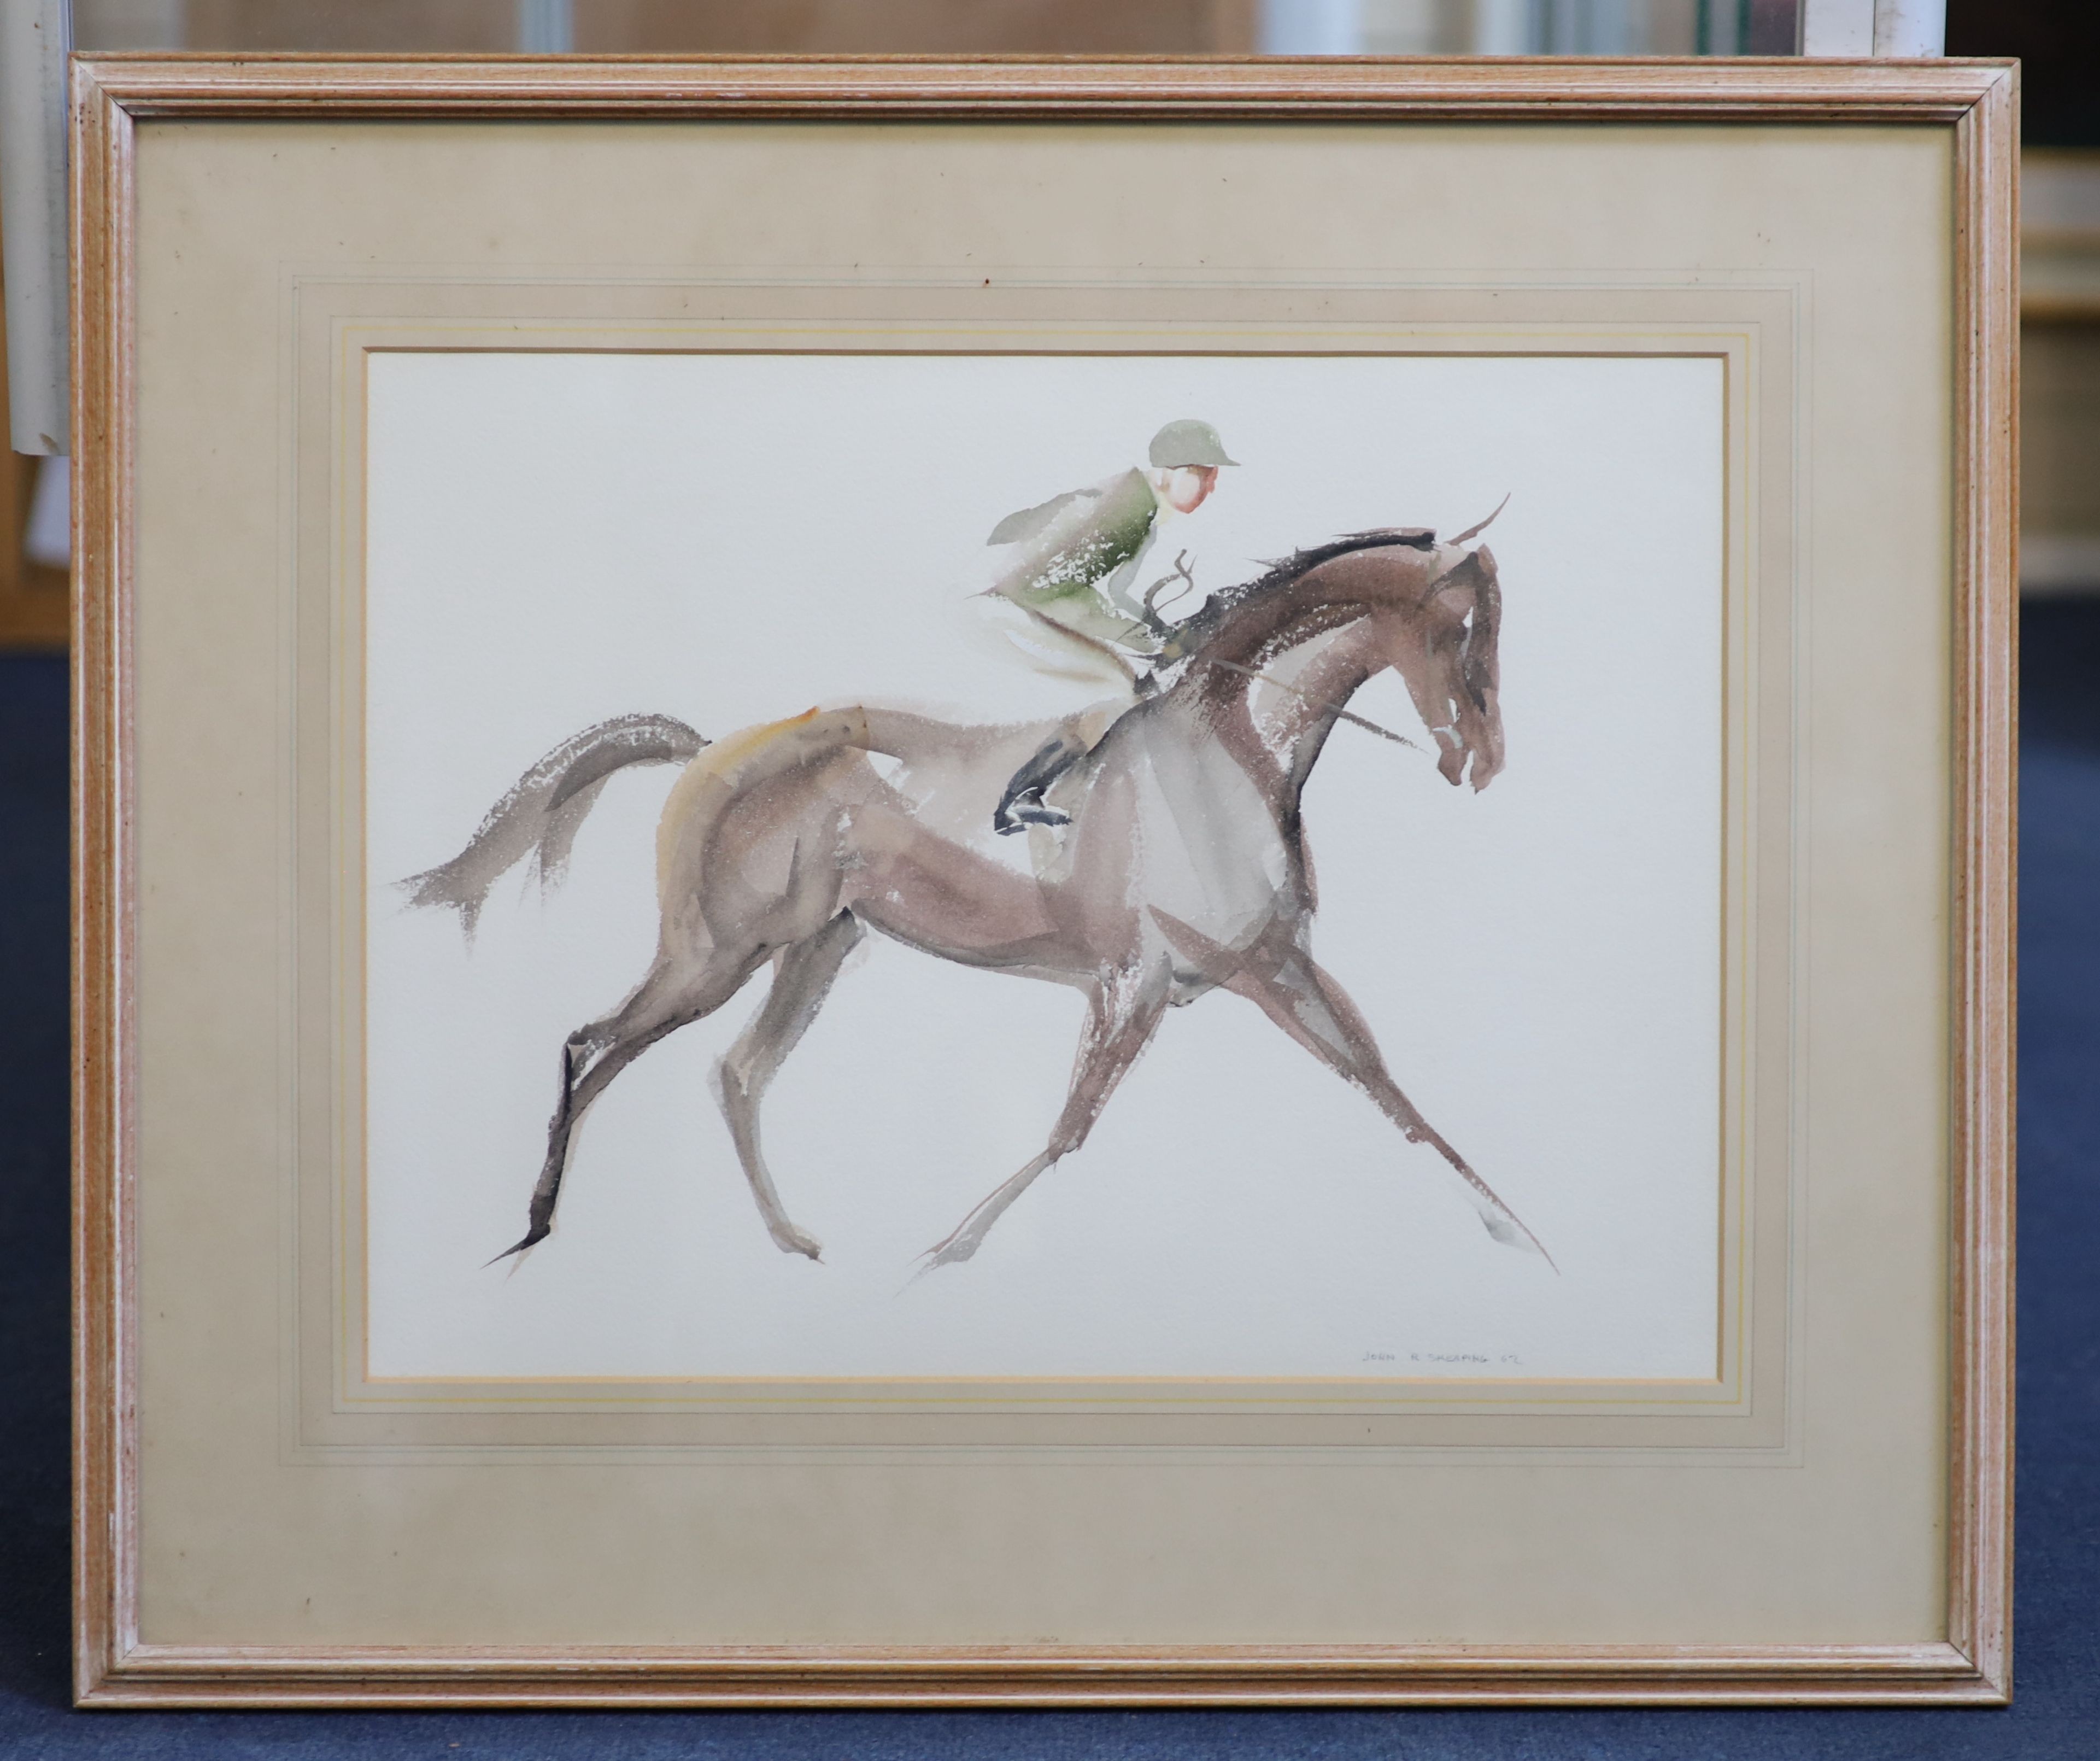 John Rattenbury Skeaping (1901-1980), Horse with jockey up, watercolour, 31 x 41cm